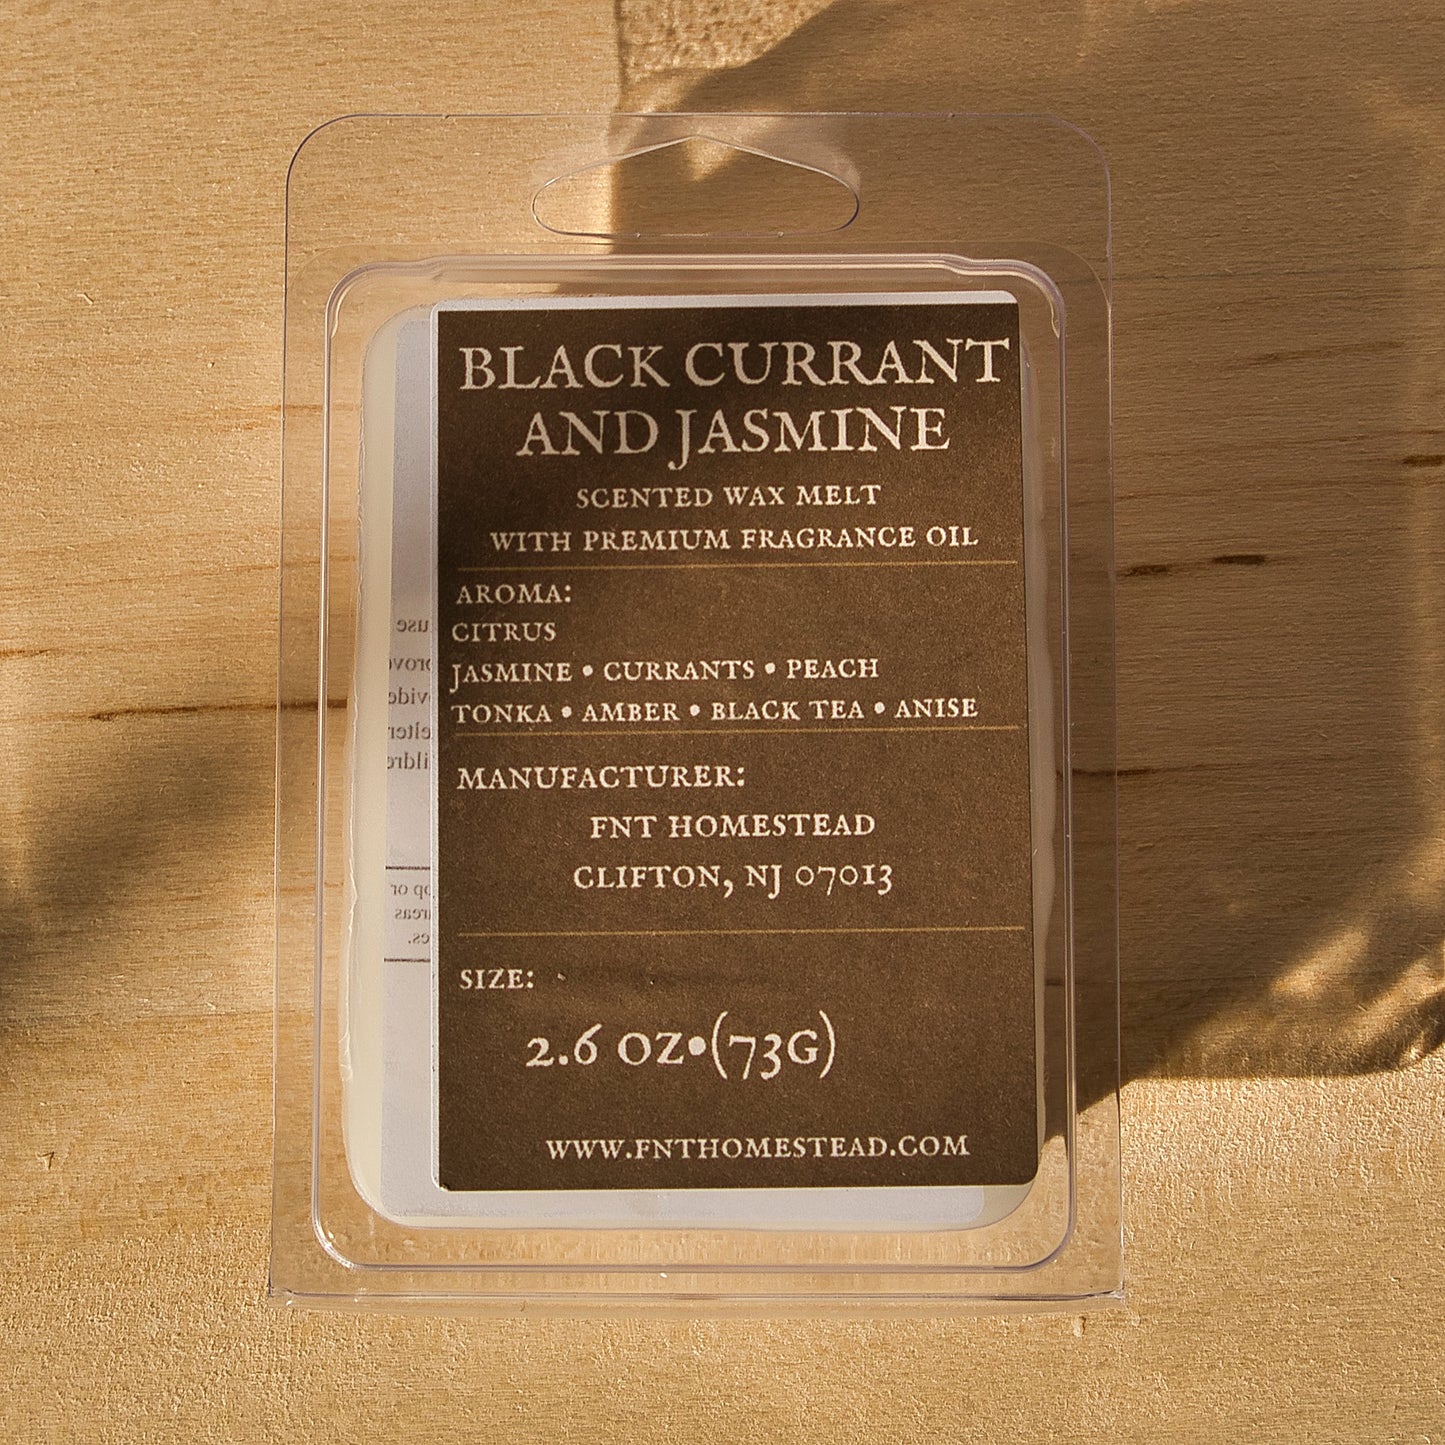 Black Currant And Jasmine Wax Melt